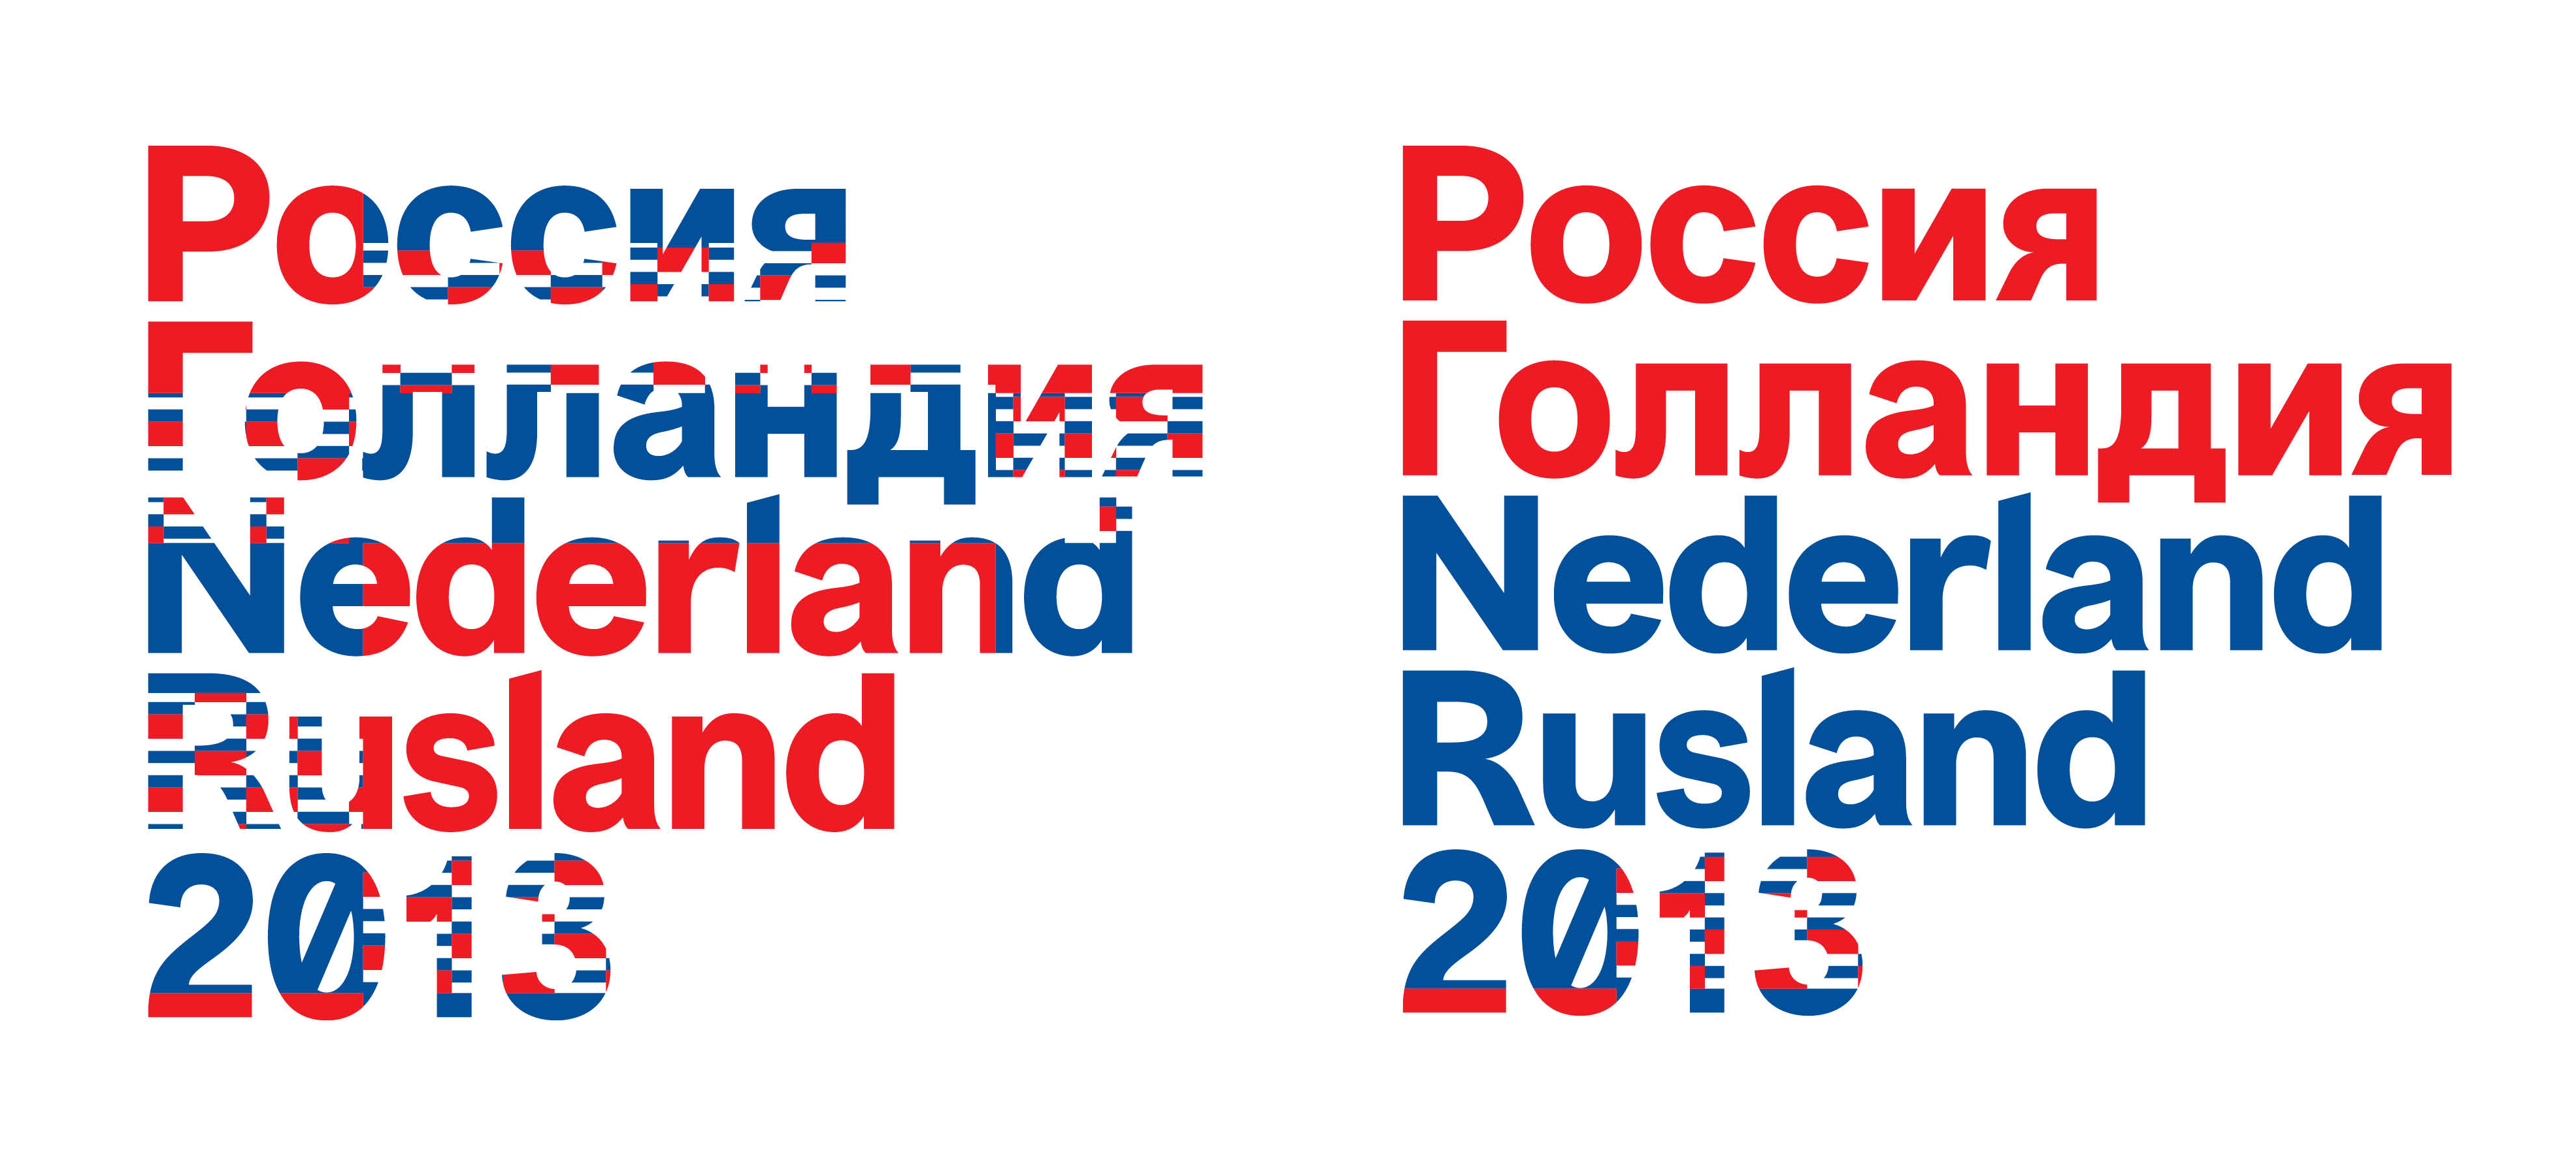 Dutch-Russian bilateral year